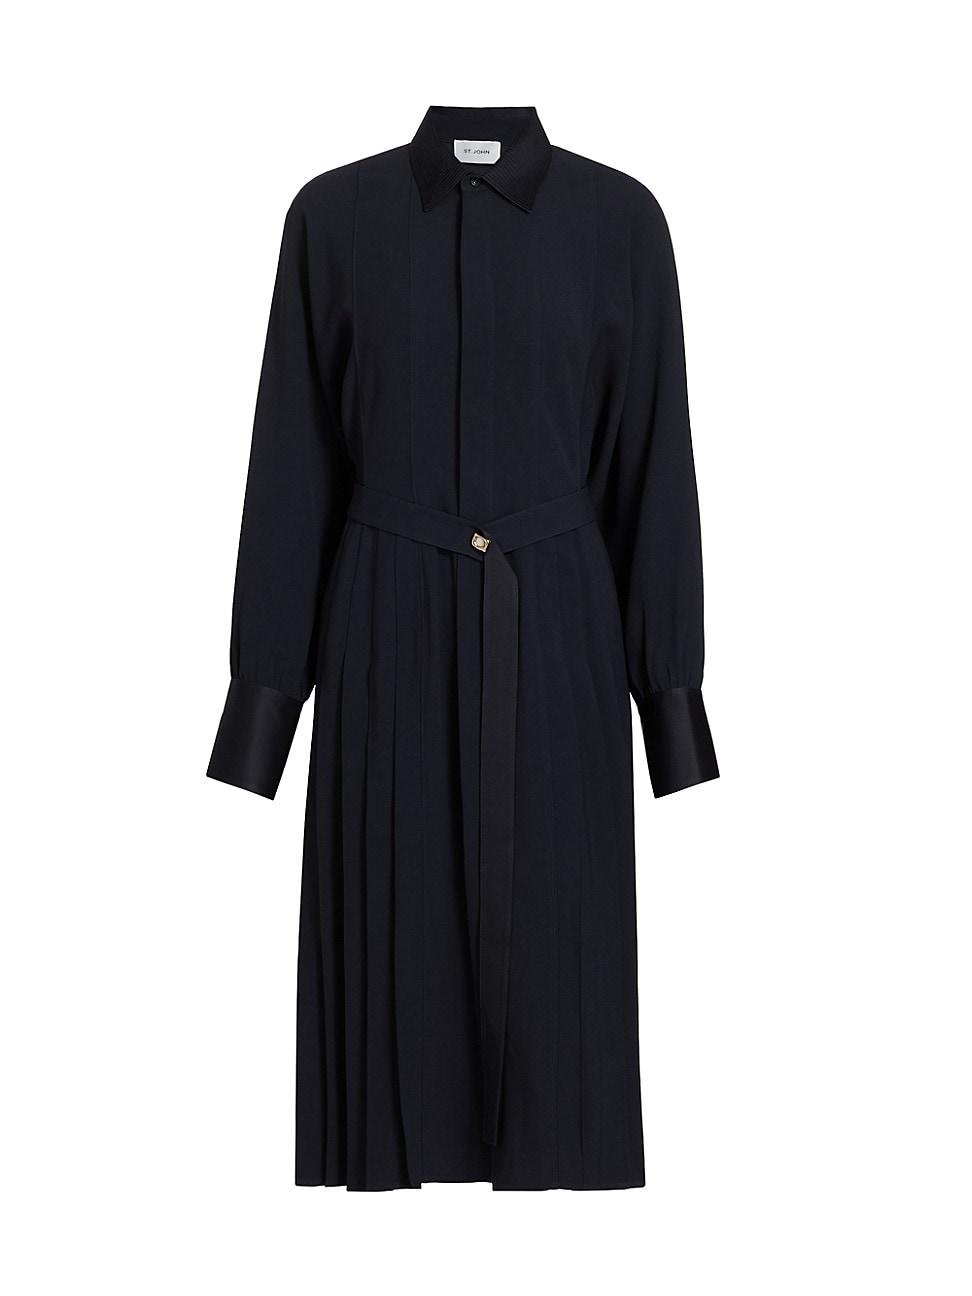 St. John Crepe Belted Shirtdress in Black | Lyst